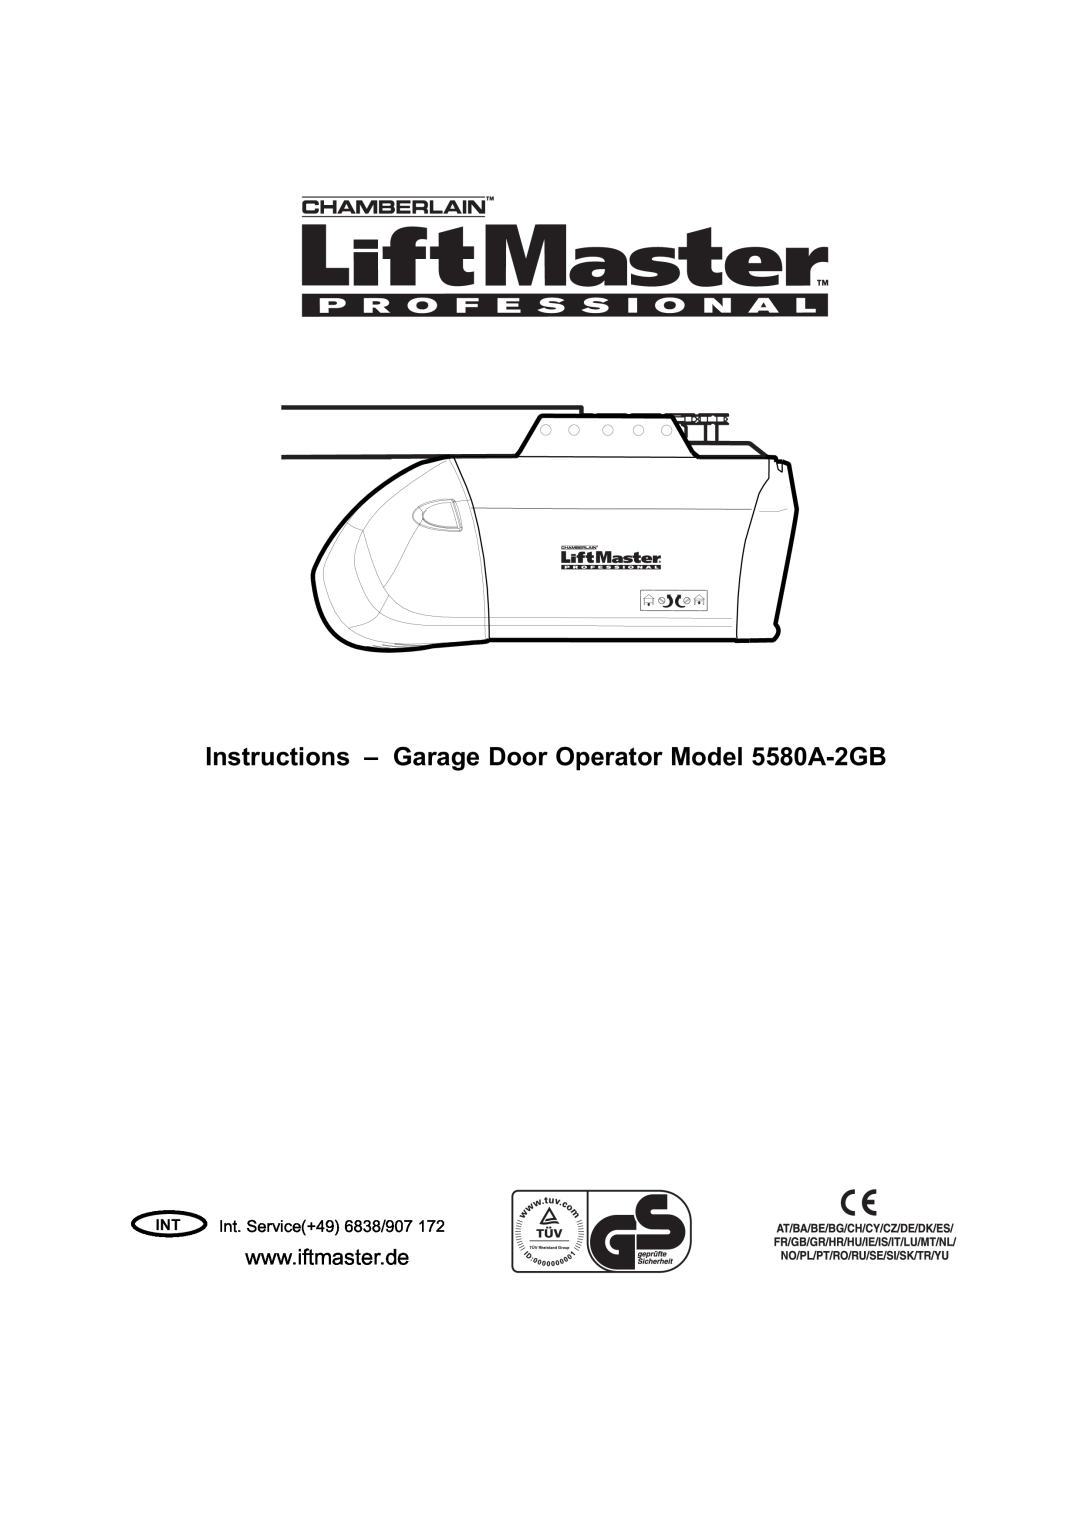 Chamberlain manual Instructions - Garage Door Operator Model 5580A-2GB, INT Int. Service+49 6838/907 